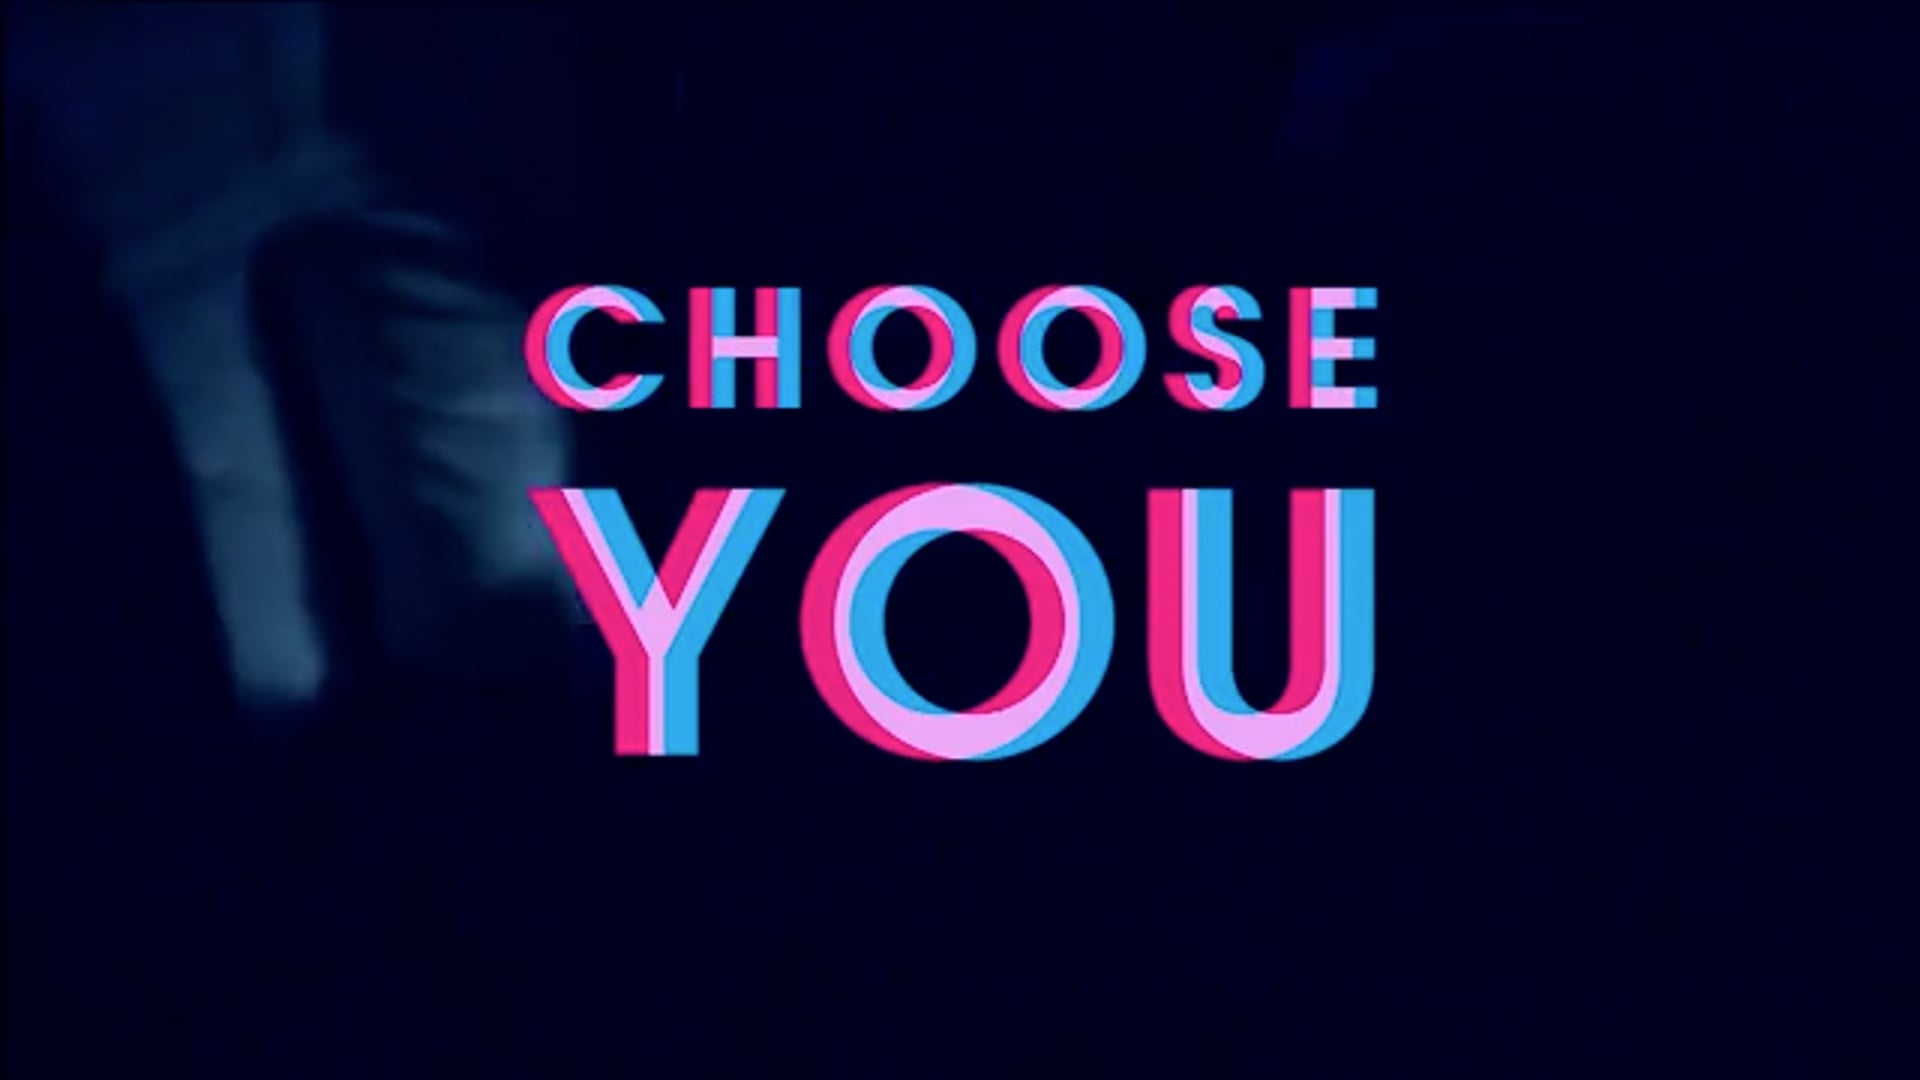 Avicii "Choose You"